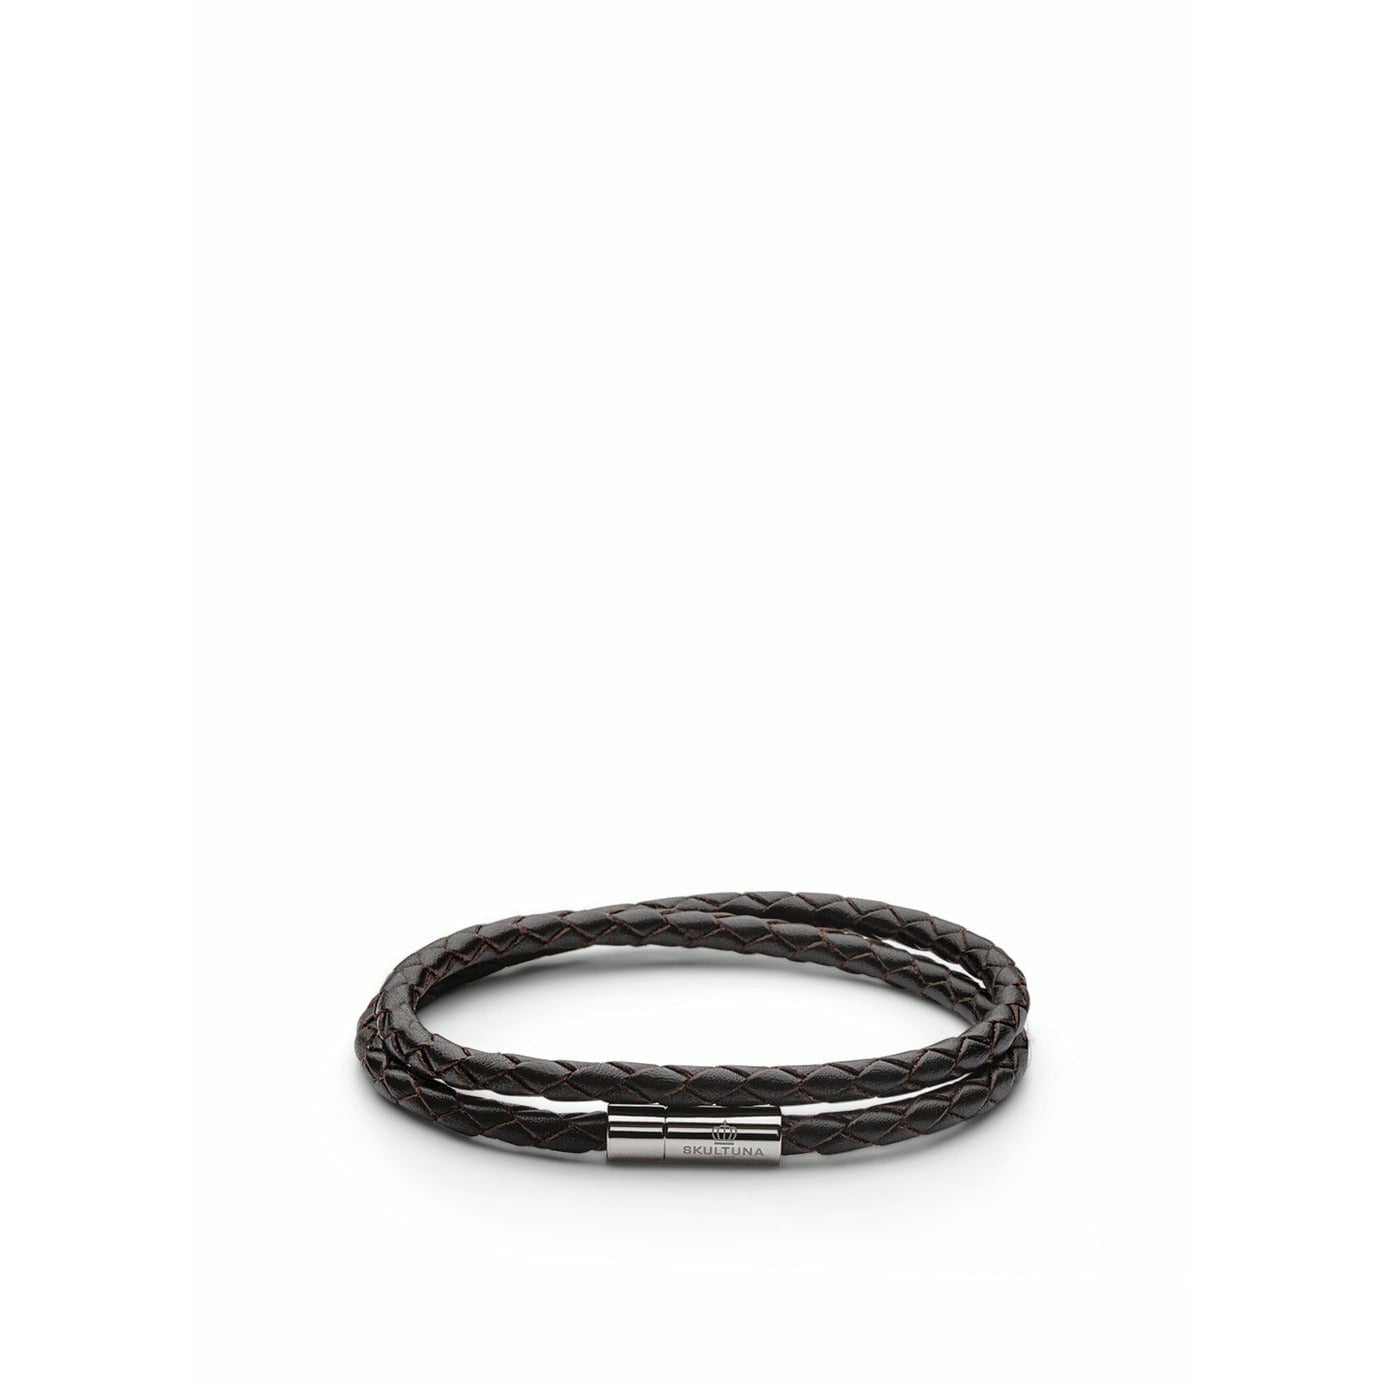 Skultuna Leather Bracelet 4mm Small ø14,5 Cm, Dark Brown